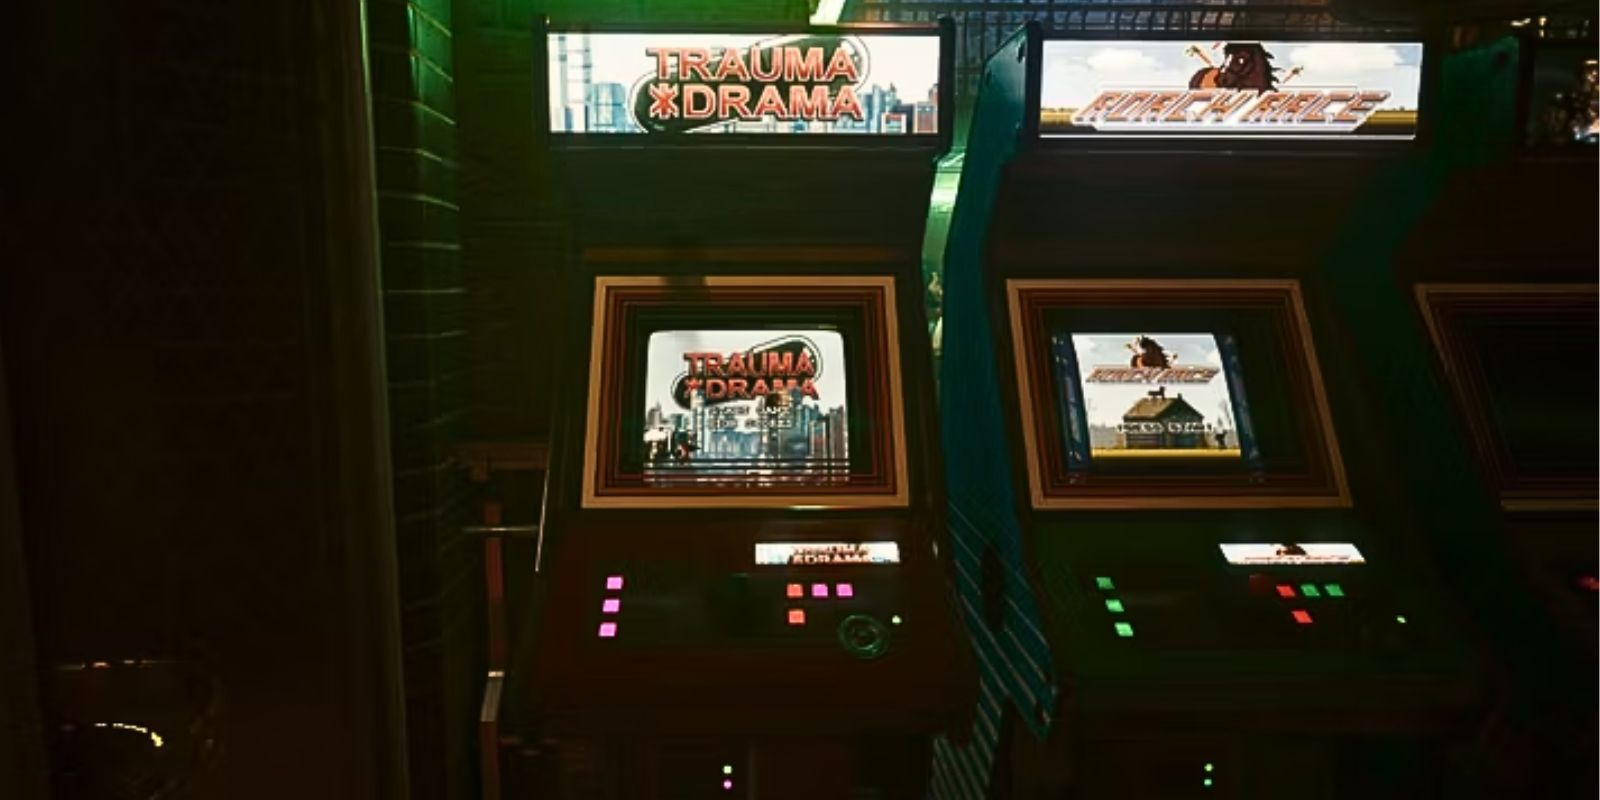 Trauma Drama and Roach Race arcade machines in Cyberpunk 2077